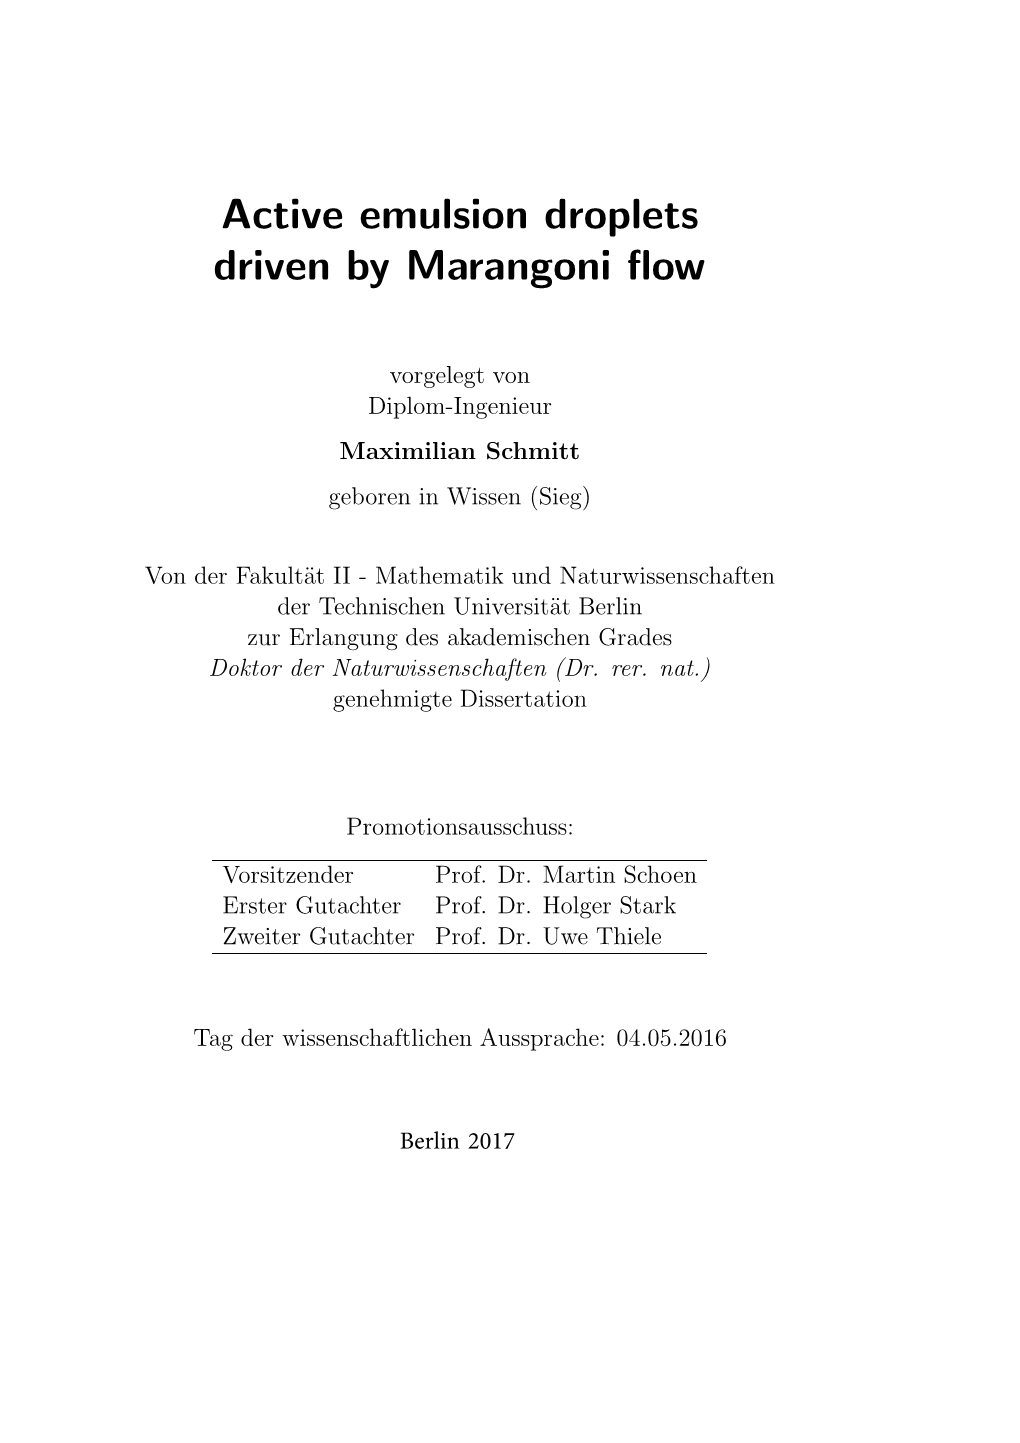 Active Emulsion Droplets Driven by Marangoni Flow